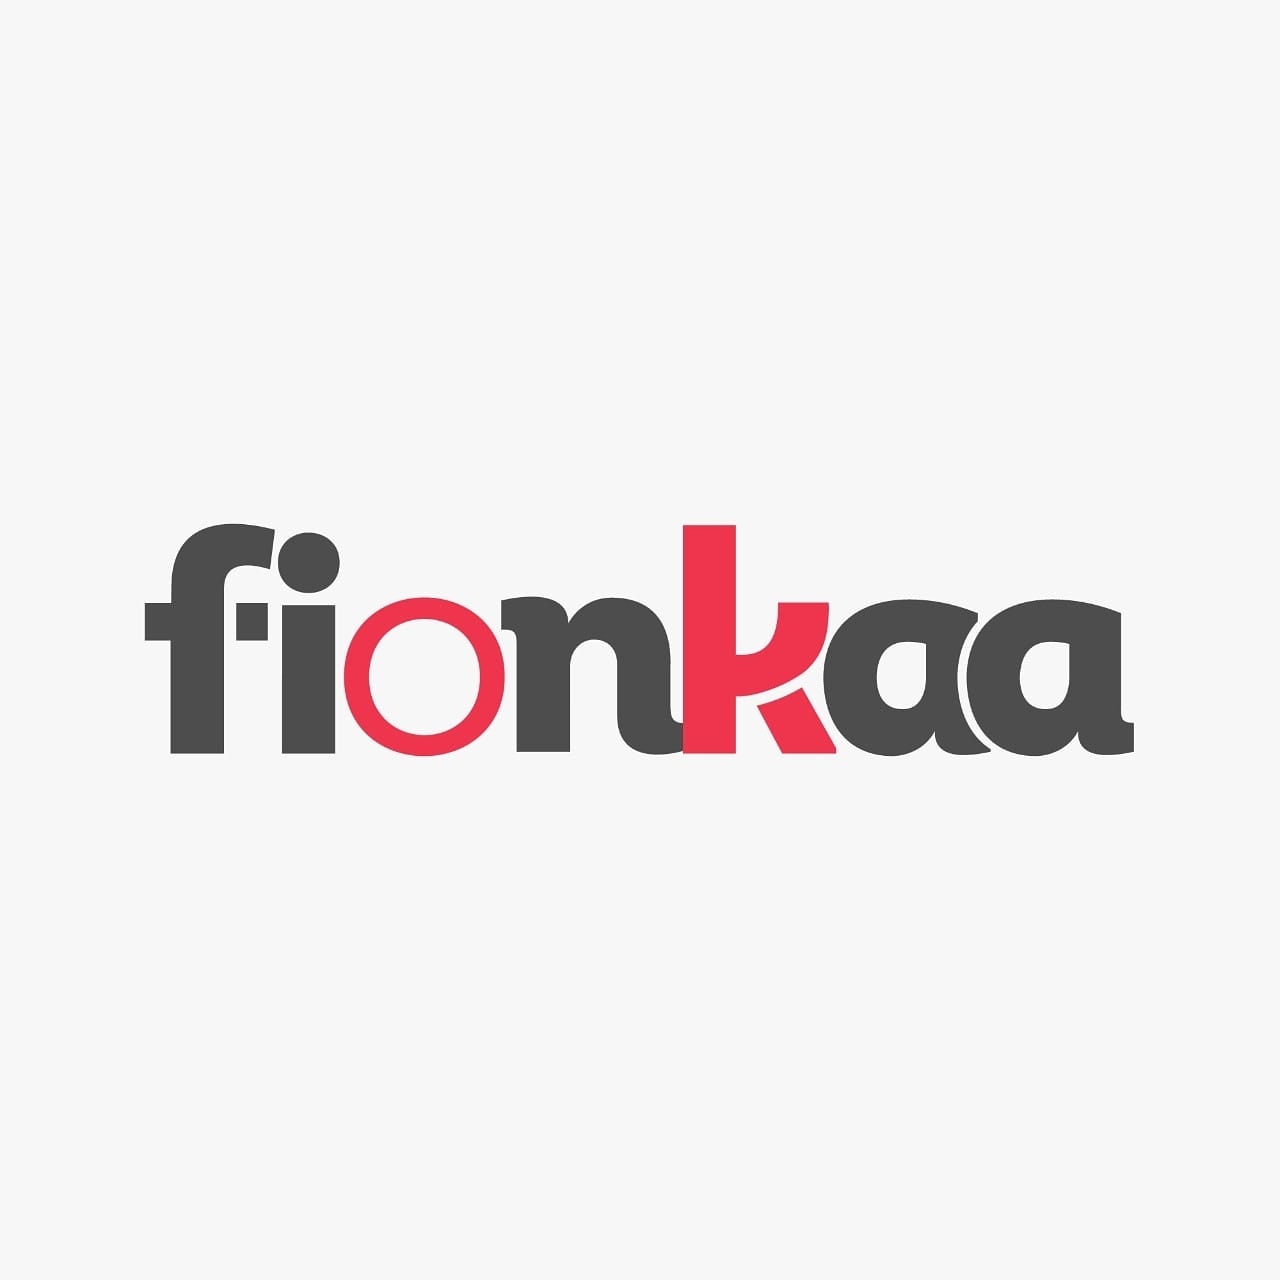 Fionkaa.com